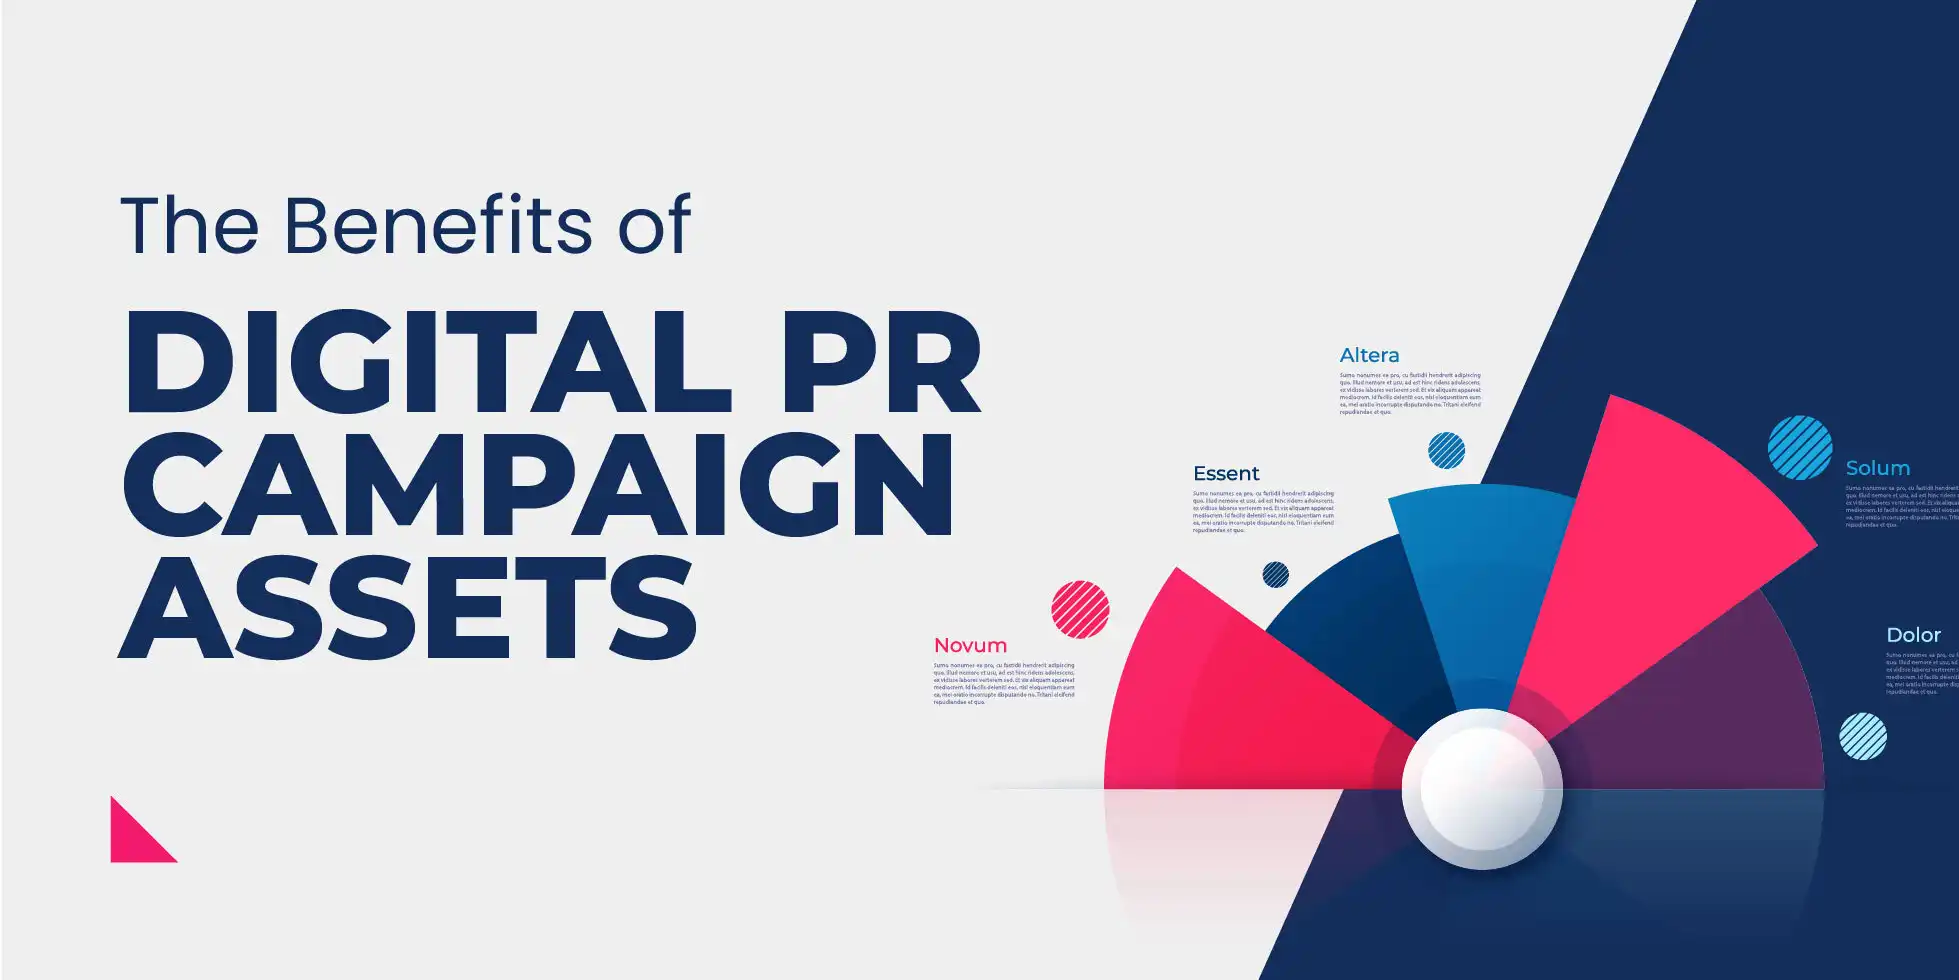 The Benefits of Digital PR Campaign Assets